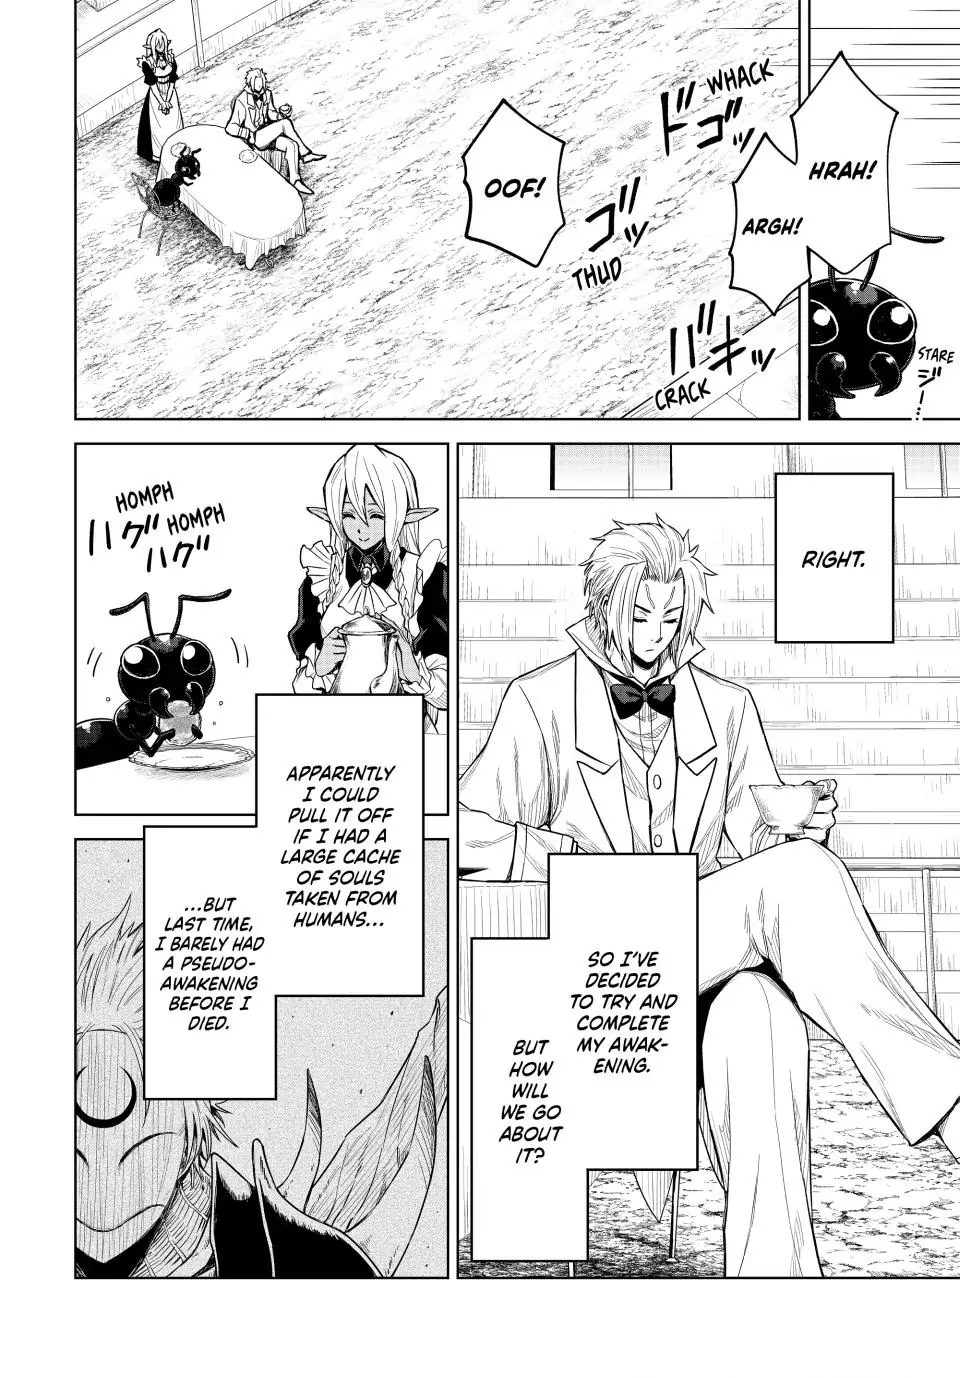 Tensei Shitara Slime Datta Ken: Clayman Revenge - 18 page 8-6264ae94